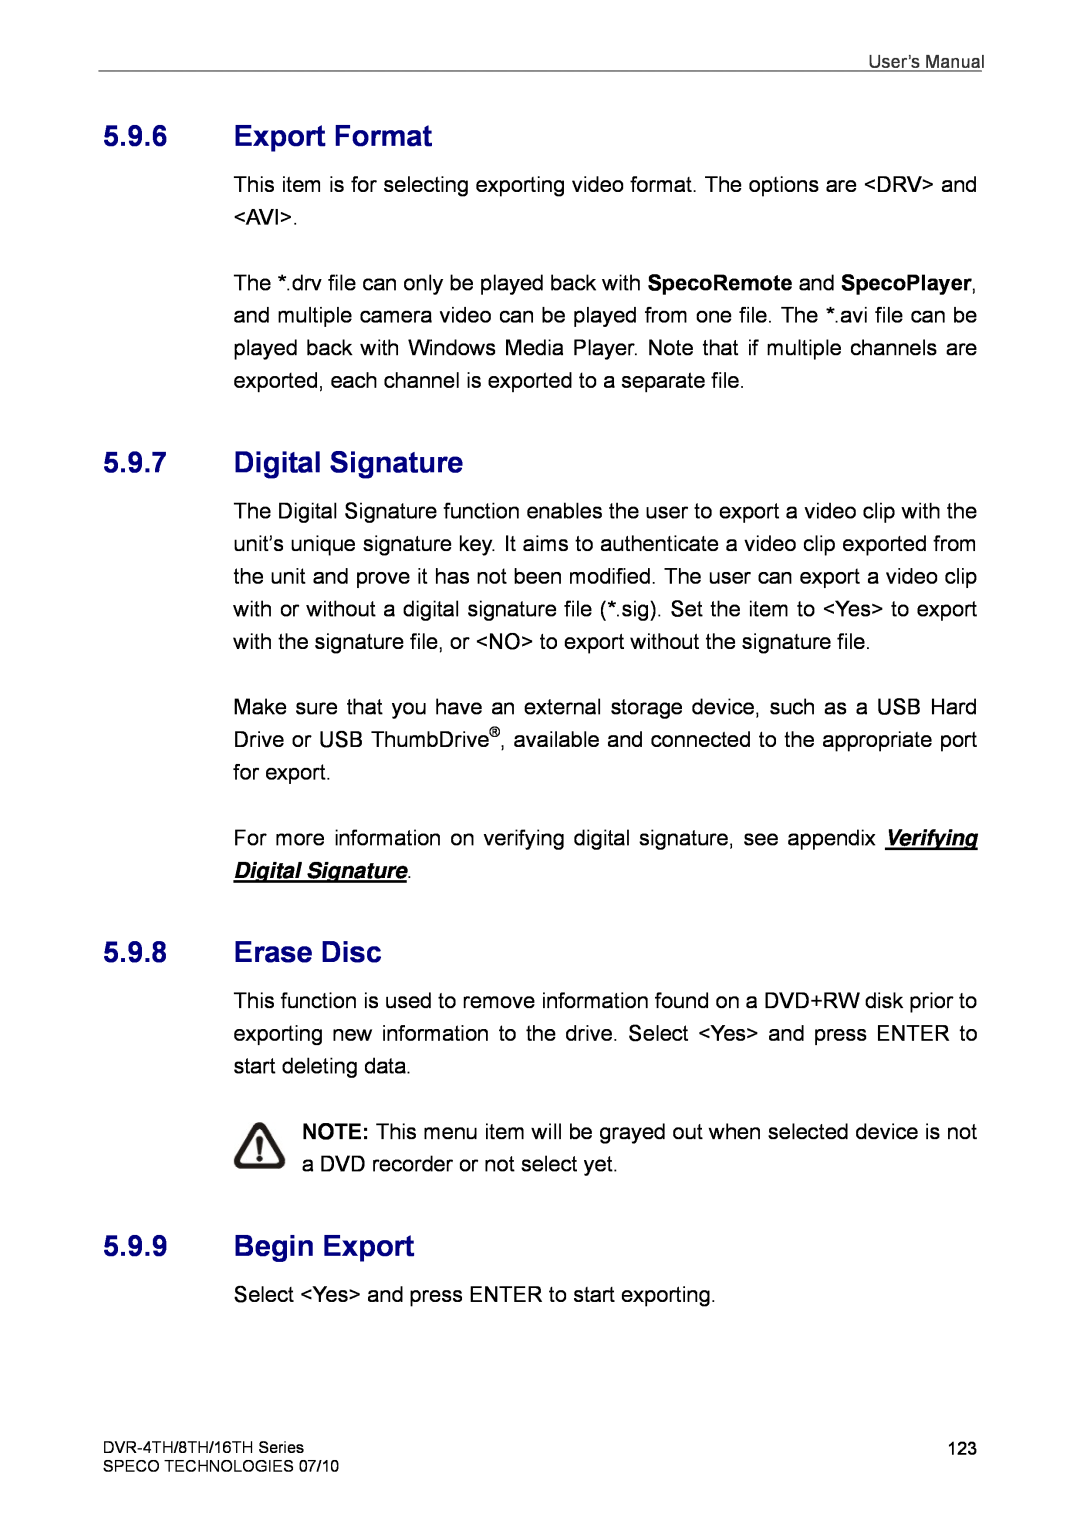 Speco Technologies 4TH, 8TH, 16TH user manual Export Format, Digital Signature, Erase Disc, Begin Export 